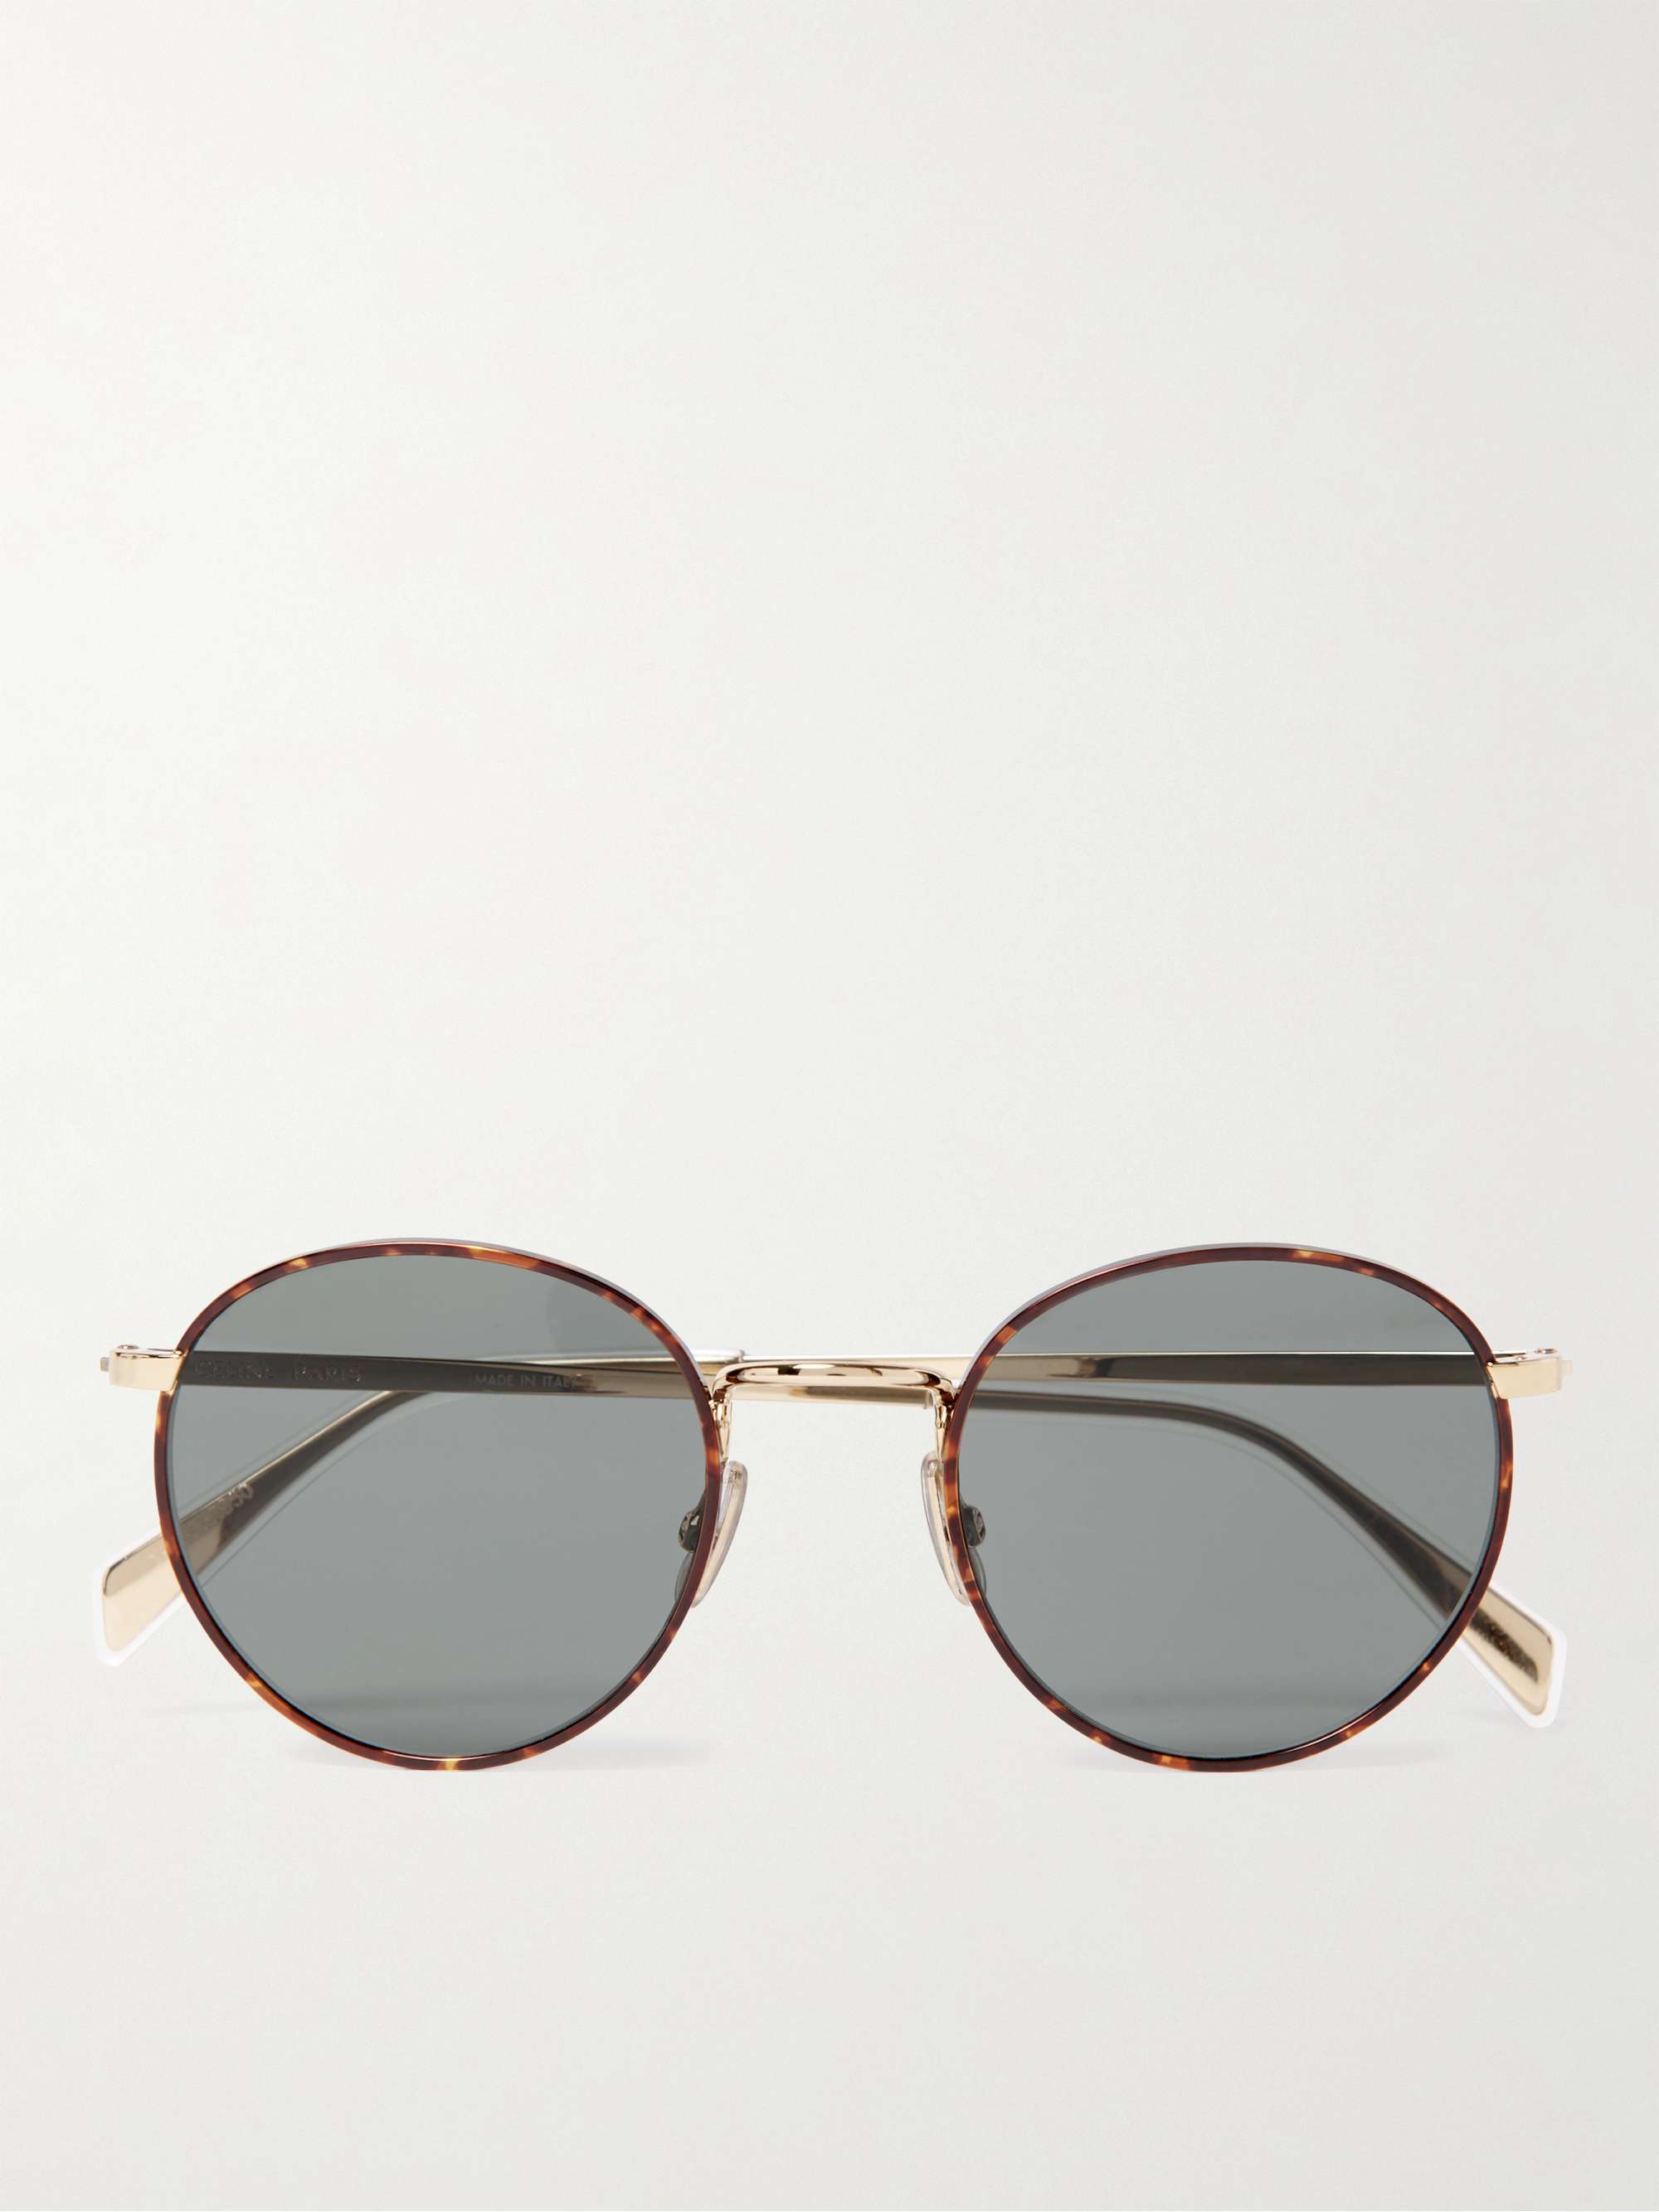 CELINE HOMME Round-Frame Silver-Tone Sunglasses